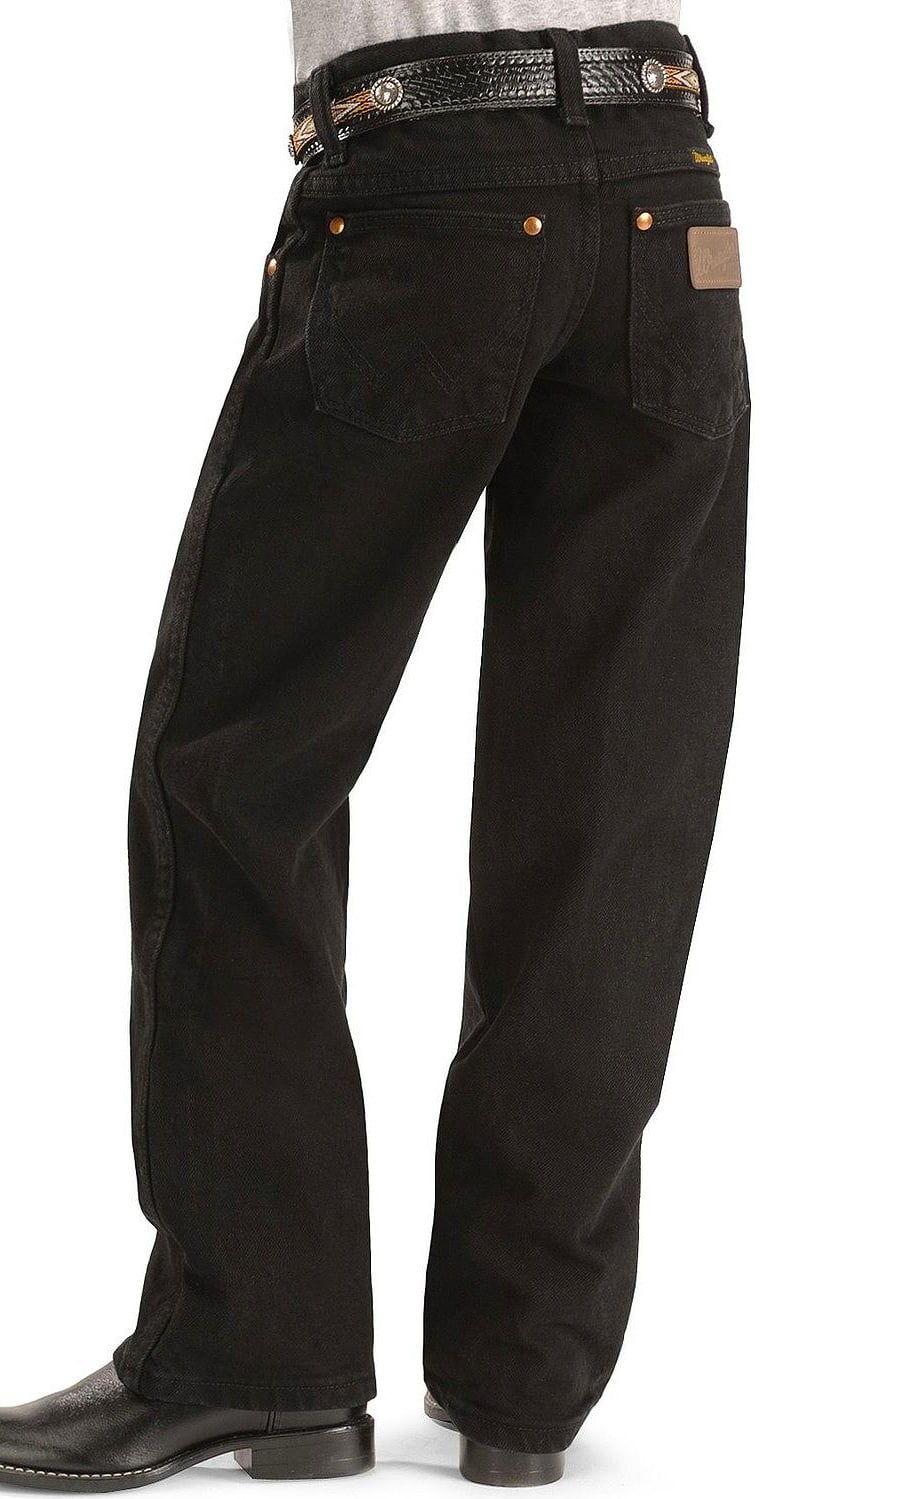 black wrangler jeans